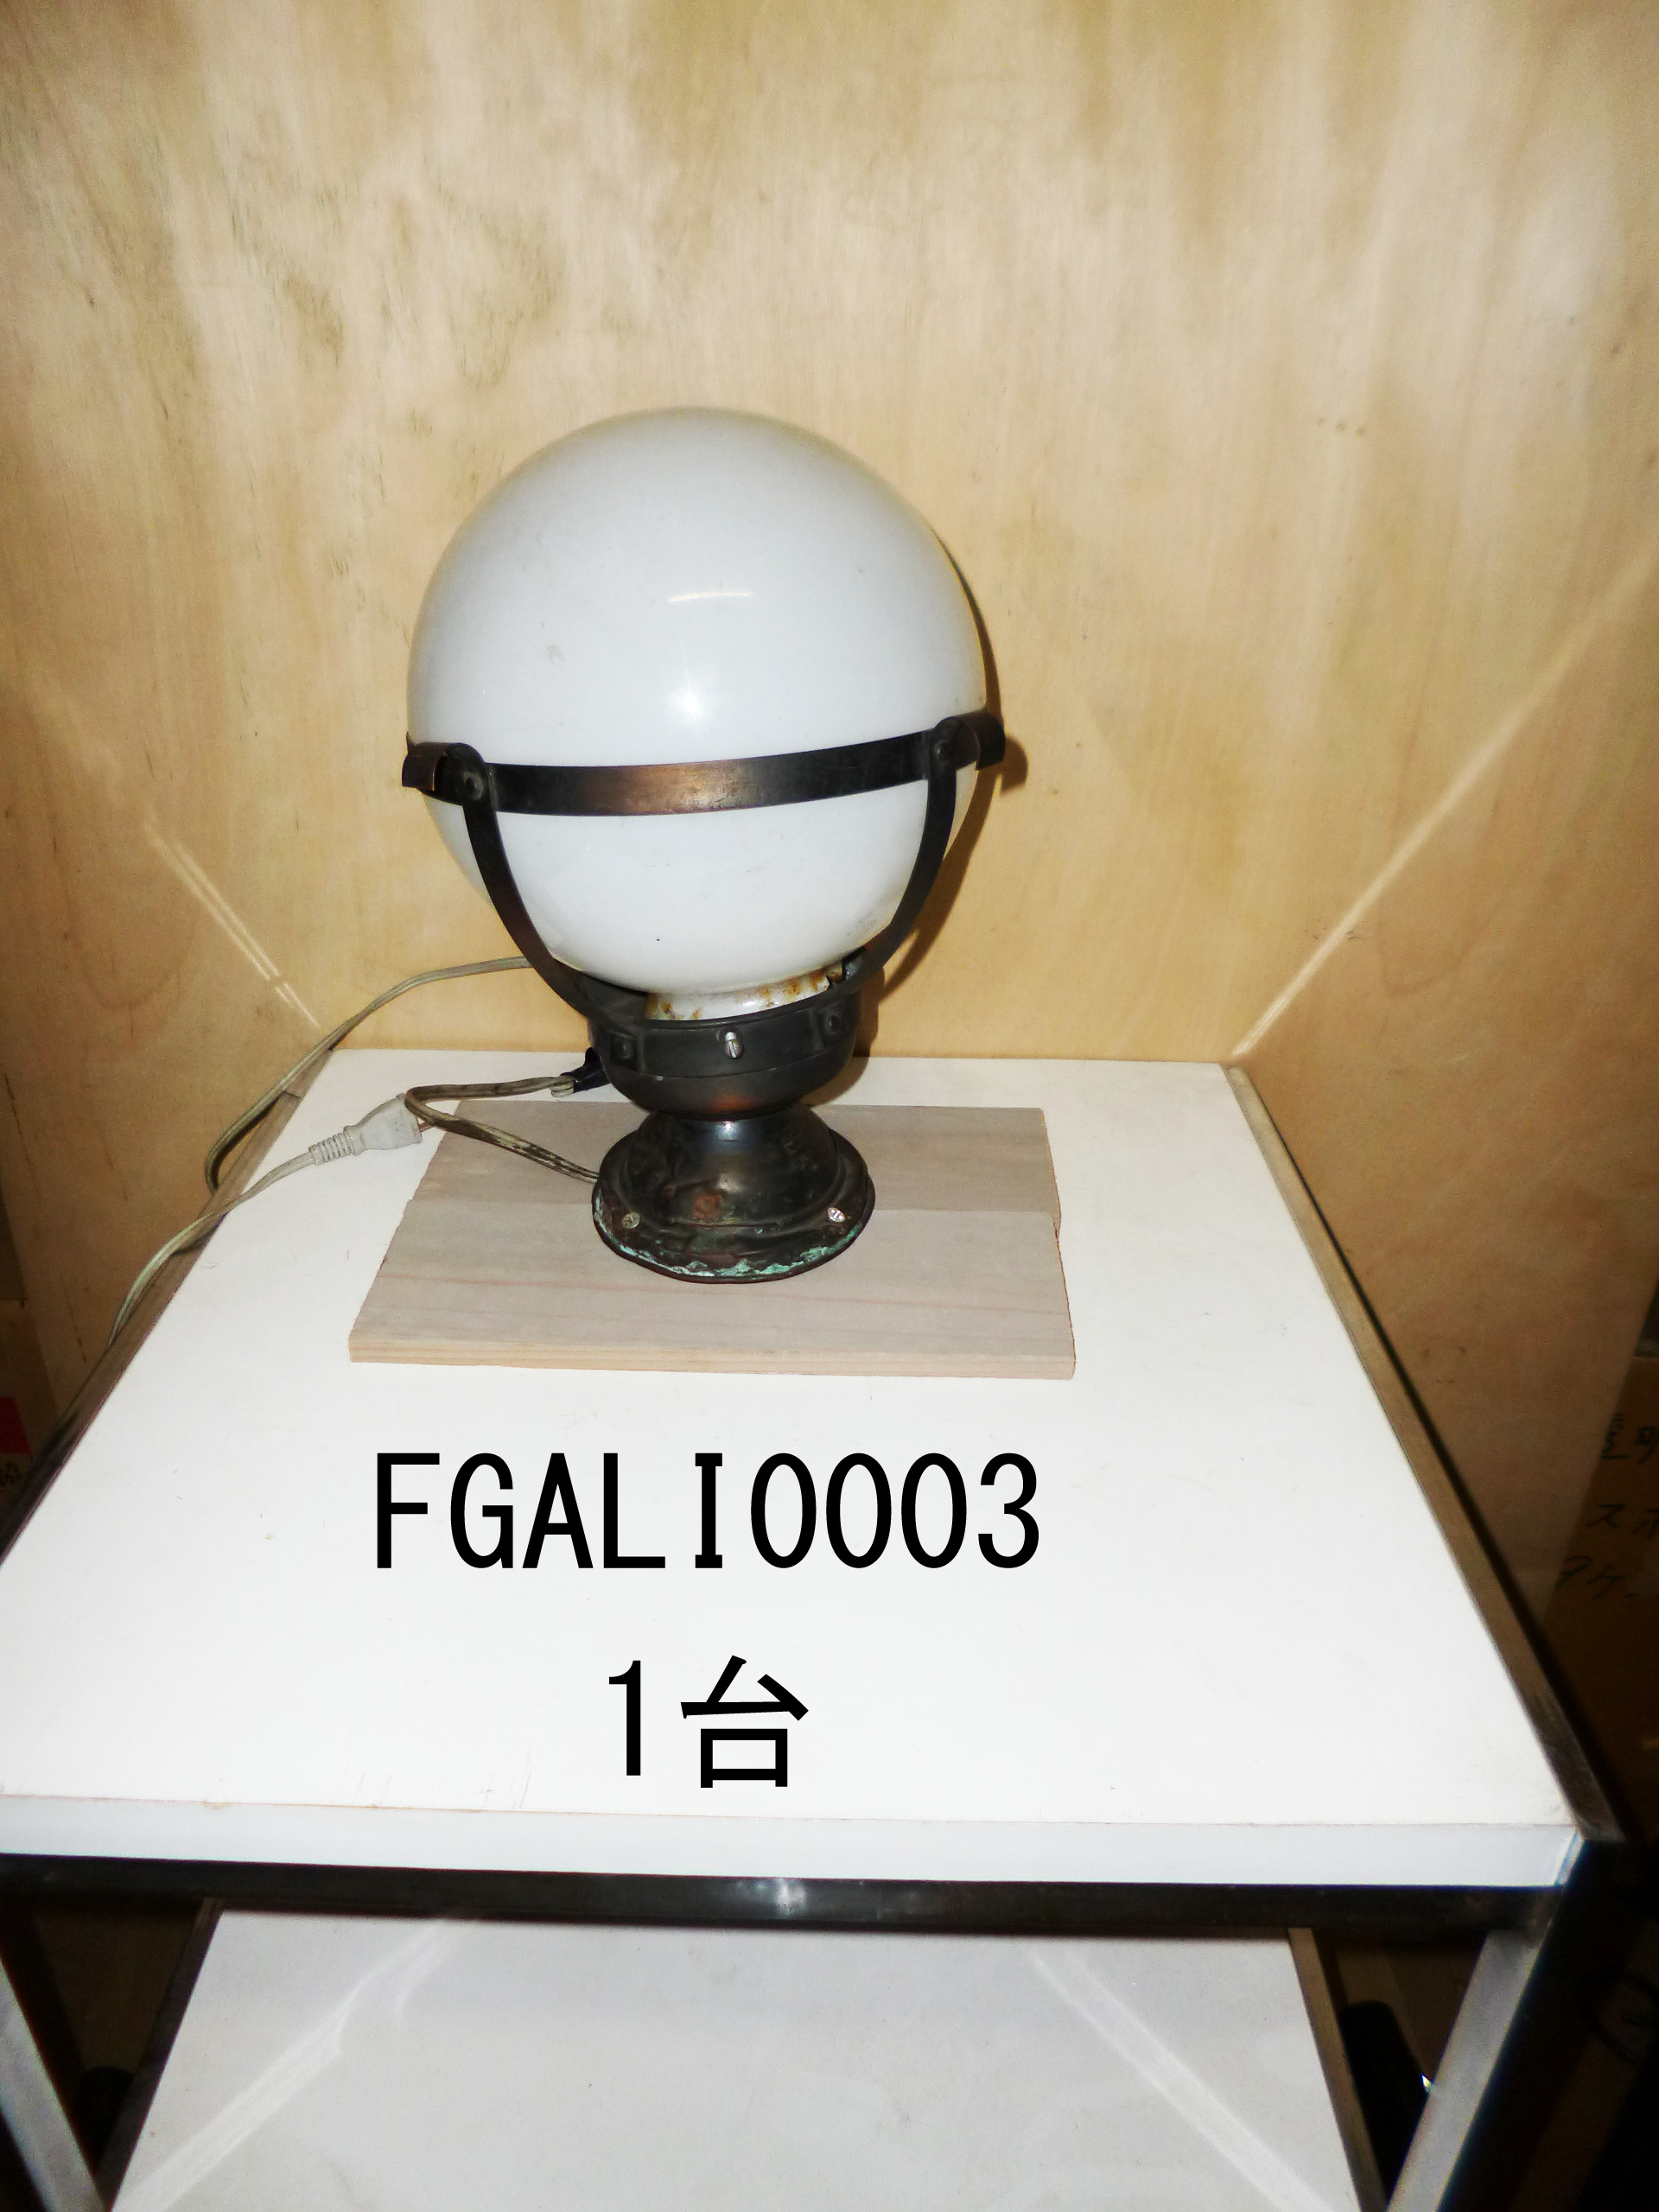 FGALI0003